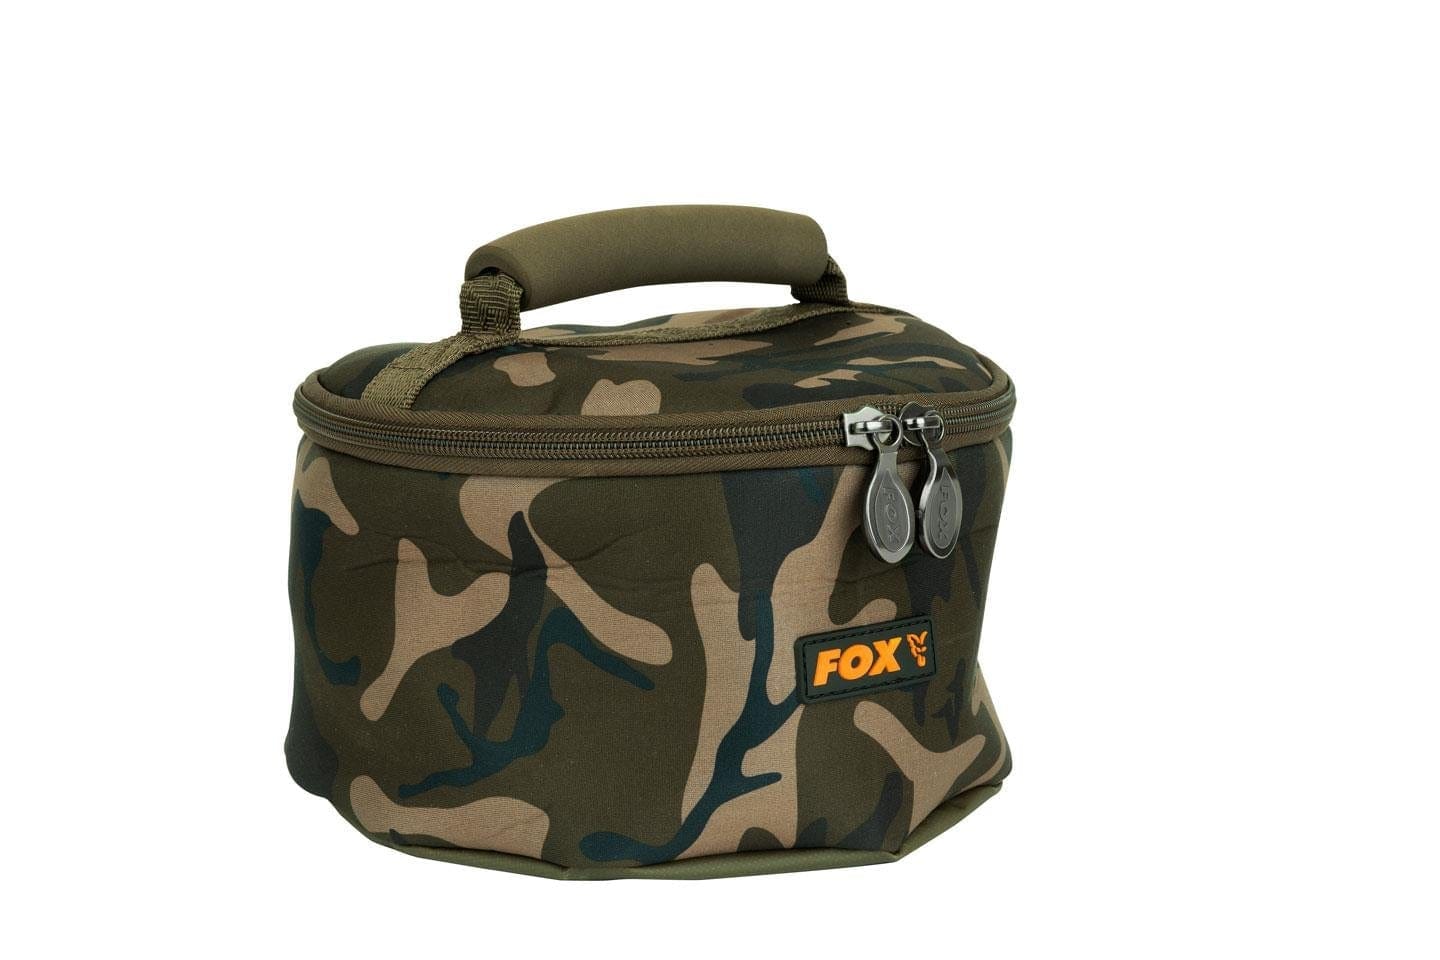 FOX Camo Neoprene Cookset Bag.